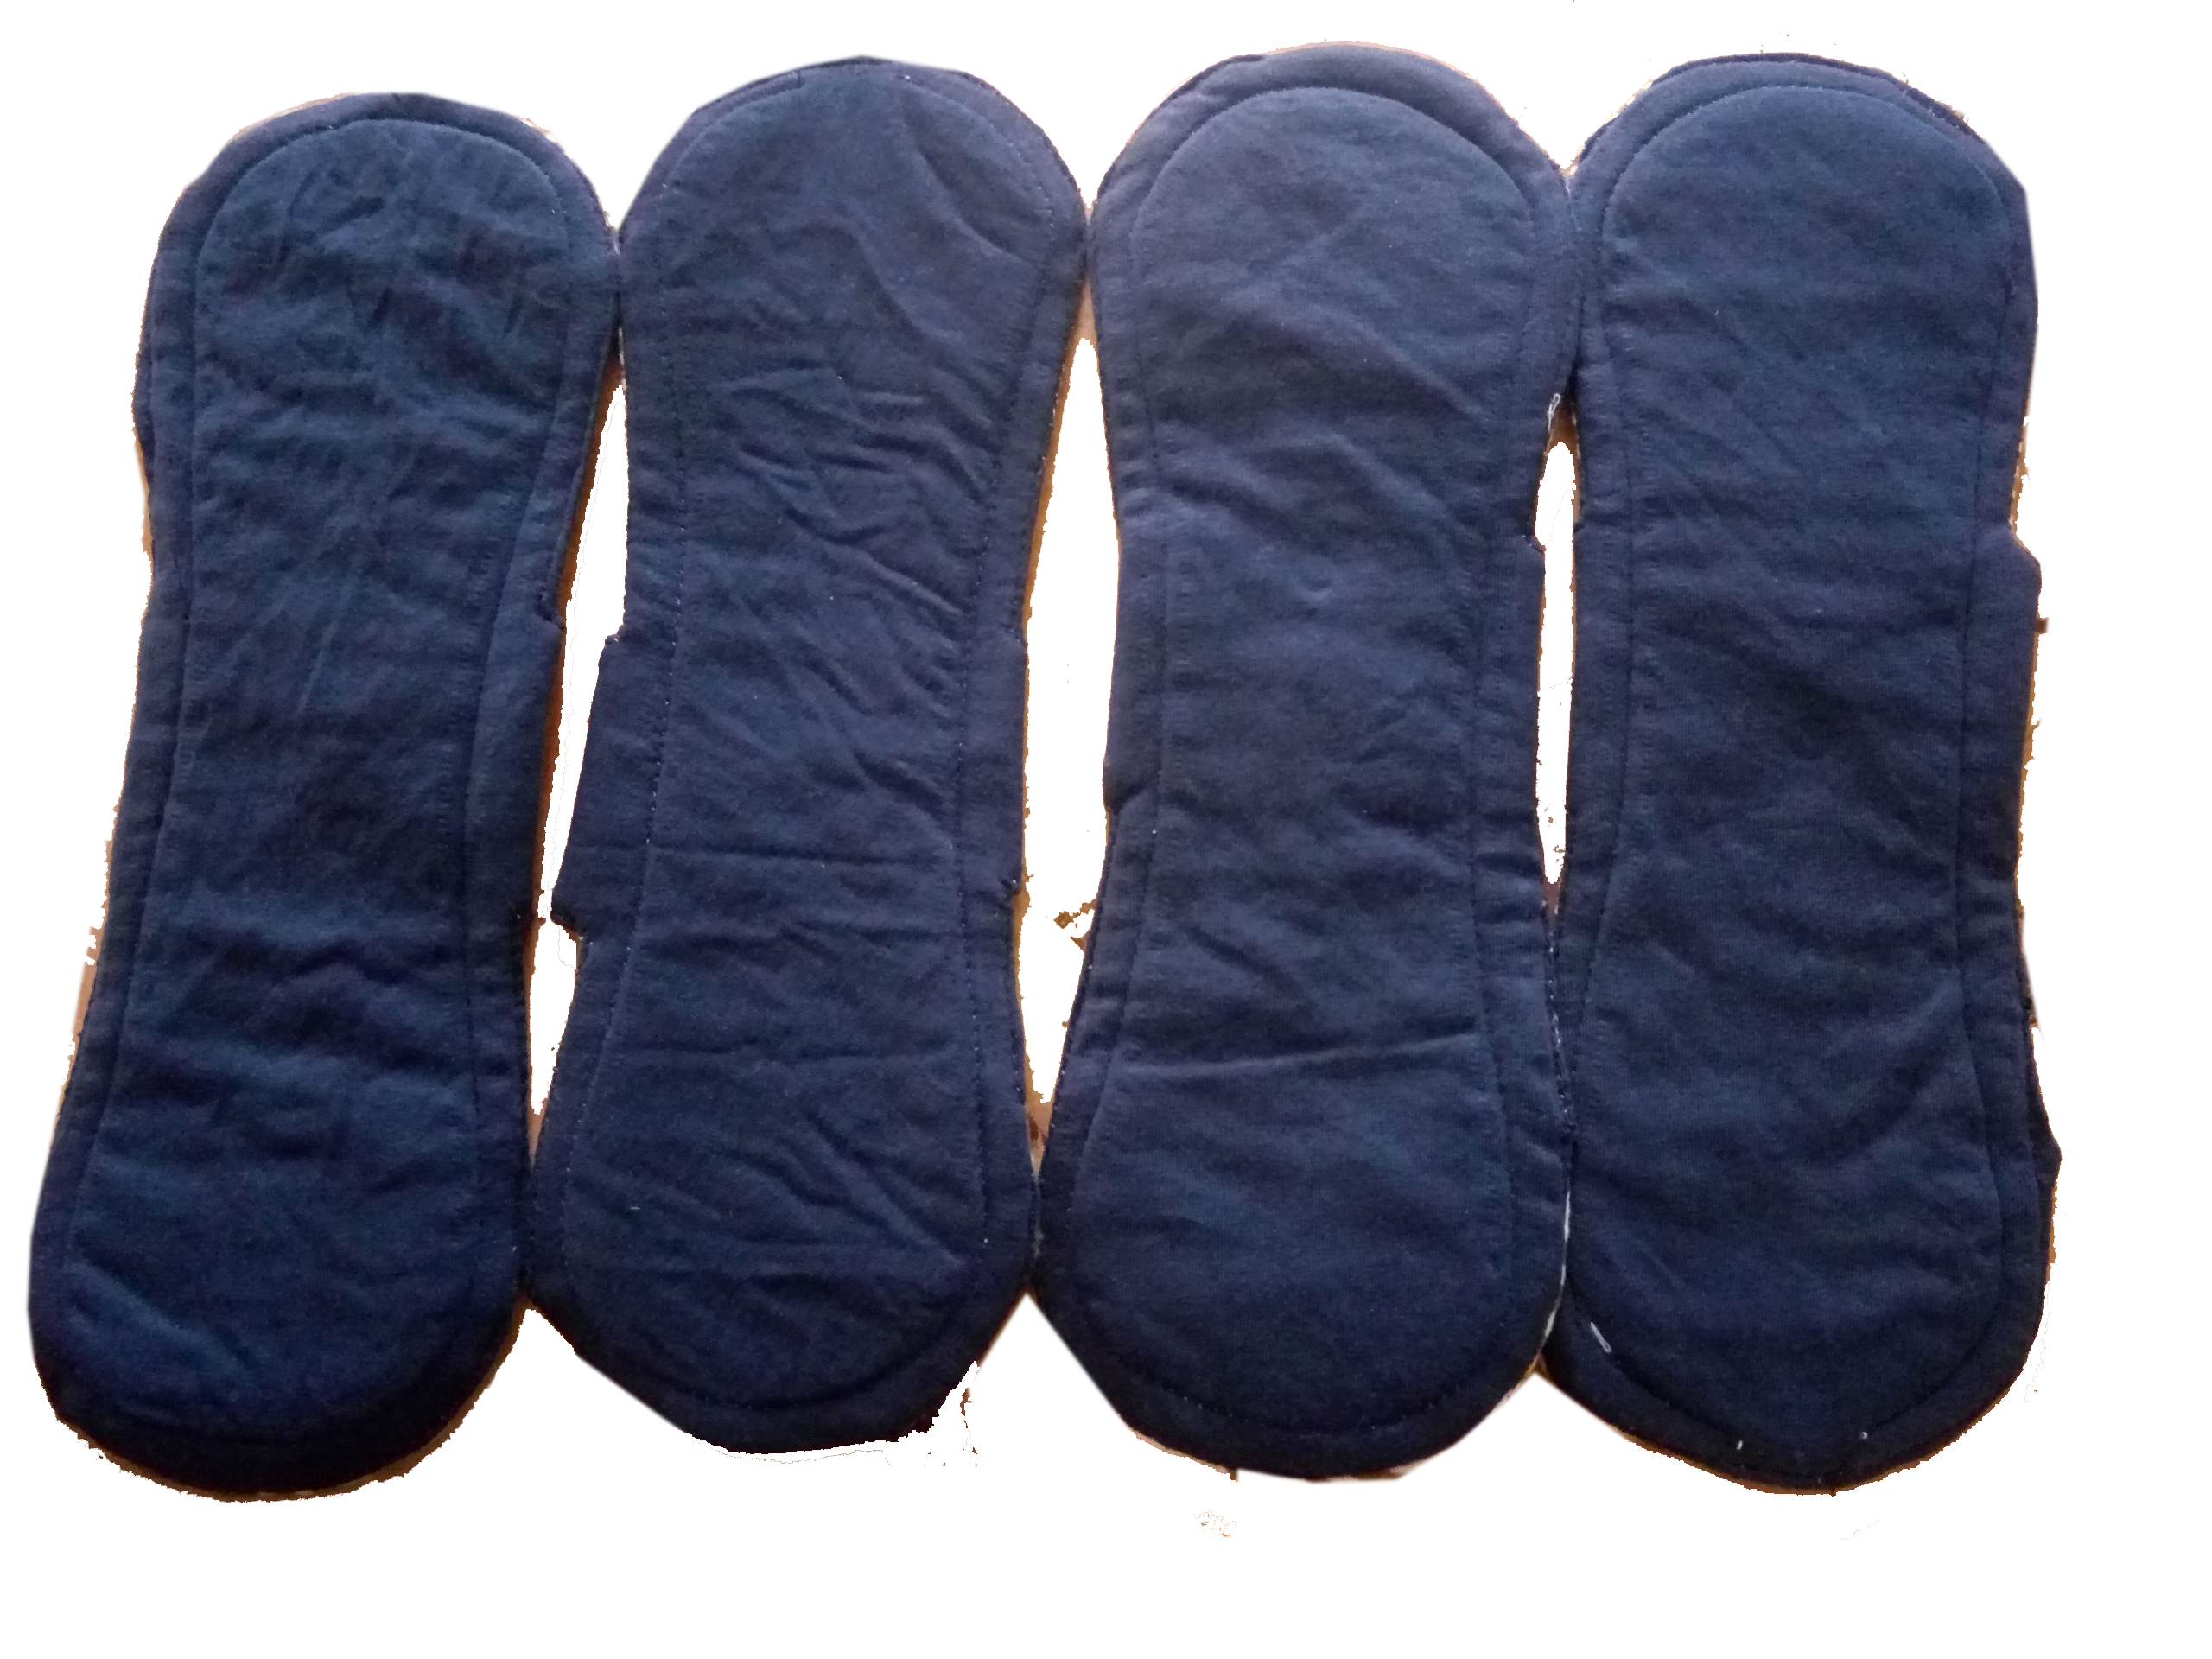 Anokhi Reusable Cotton/Cloth Washable Sanitary Pads Set of 4 Day Pads (Pad Like) Image